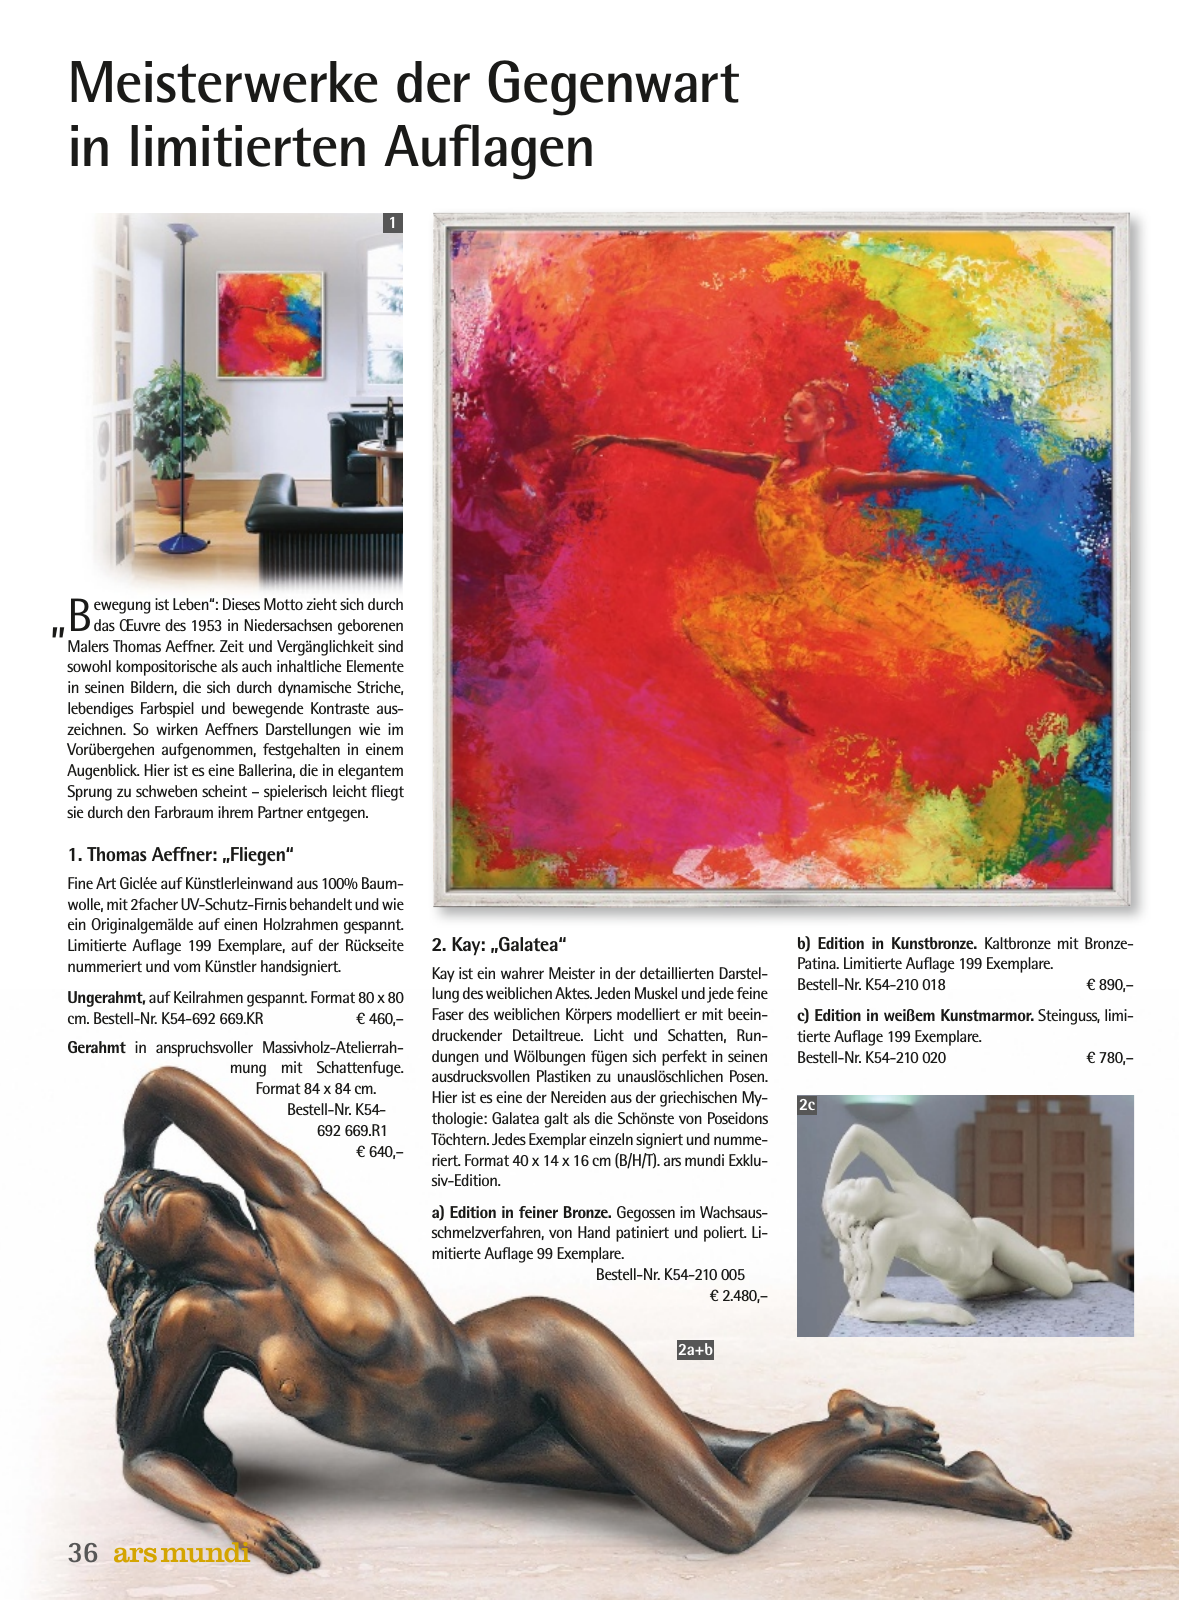 Vorschau Katalog Highlight 2014 Seite 36